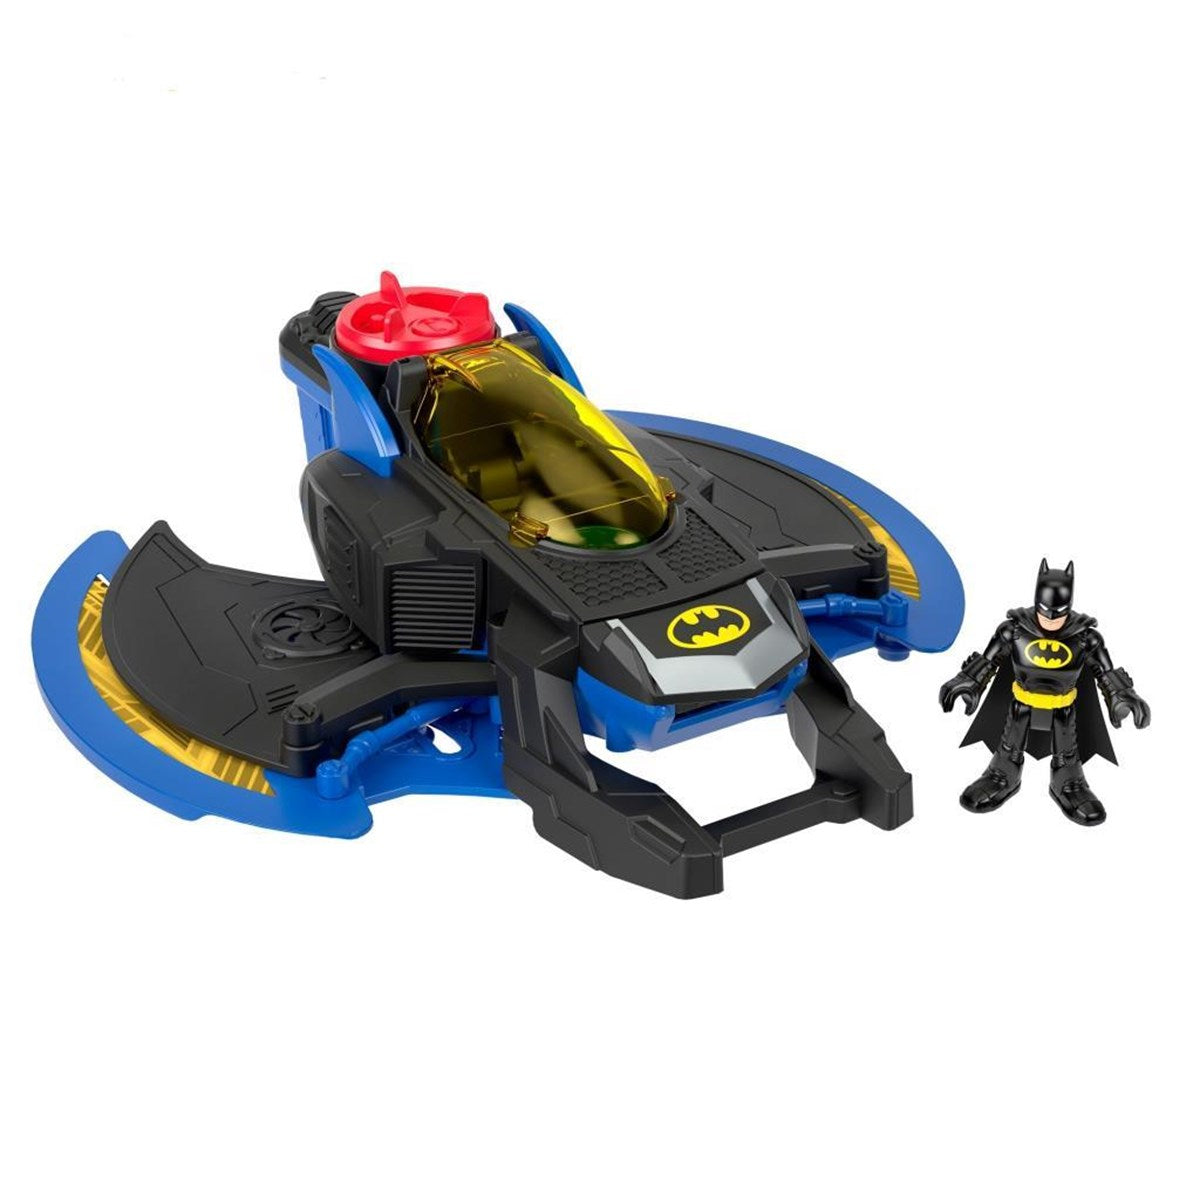 Imaginext DC Super Friends Batwing GKJ22 | Toysall